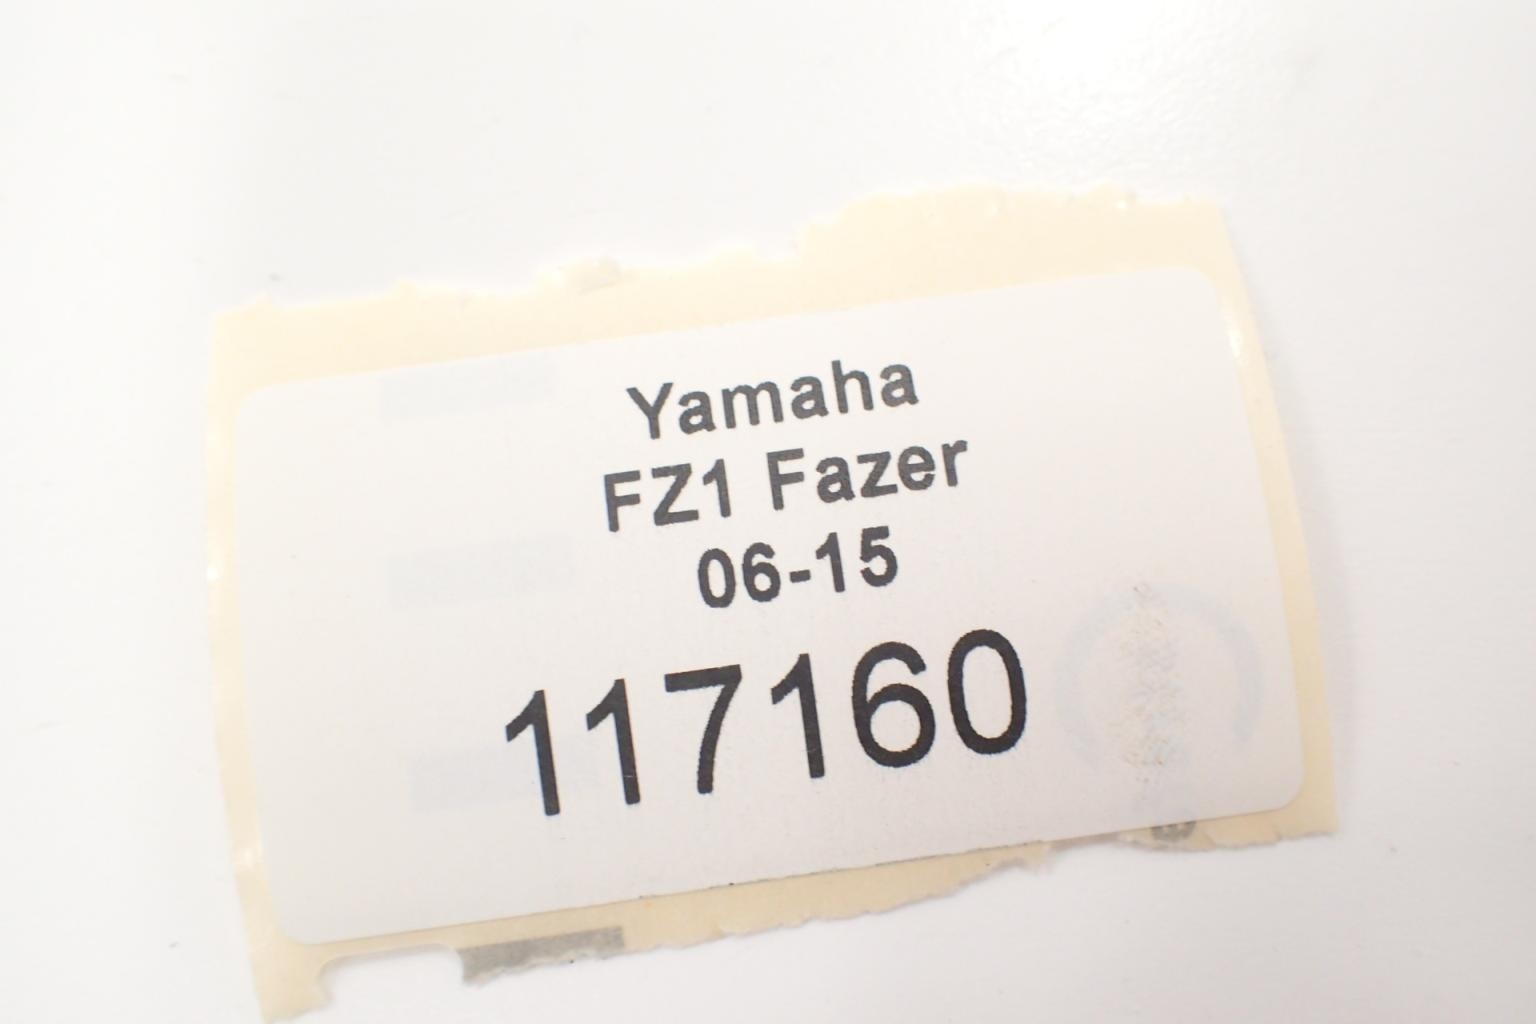 117160 yamaha fz1 fazer 06 - 15 амортизатор задняя ohlins